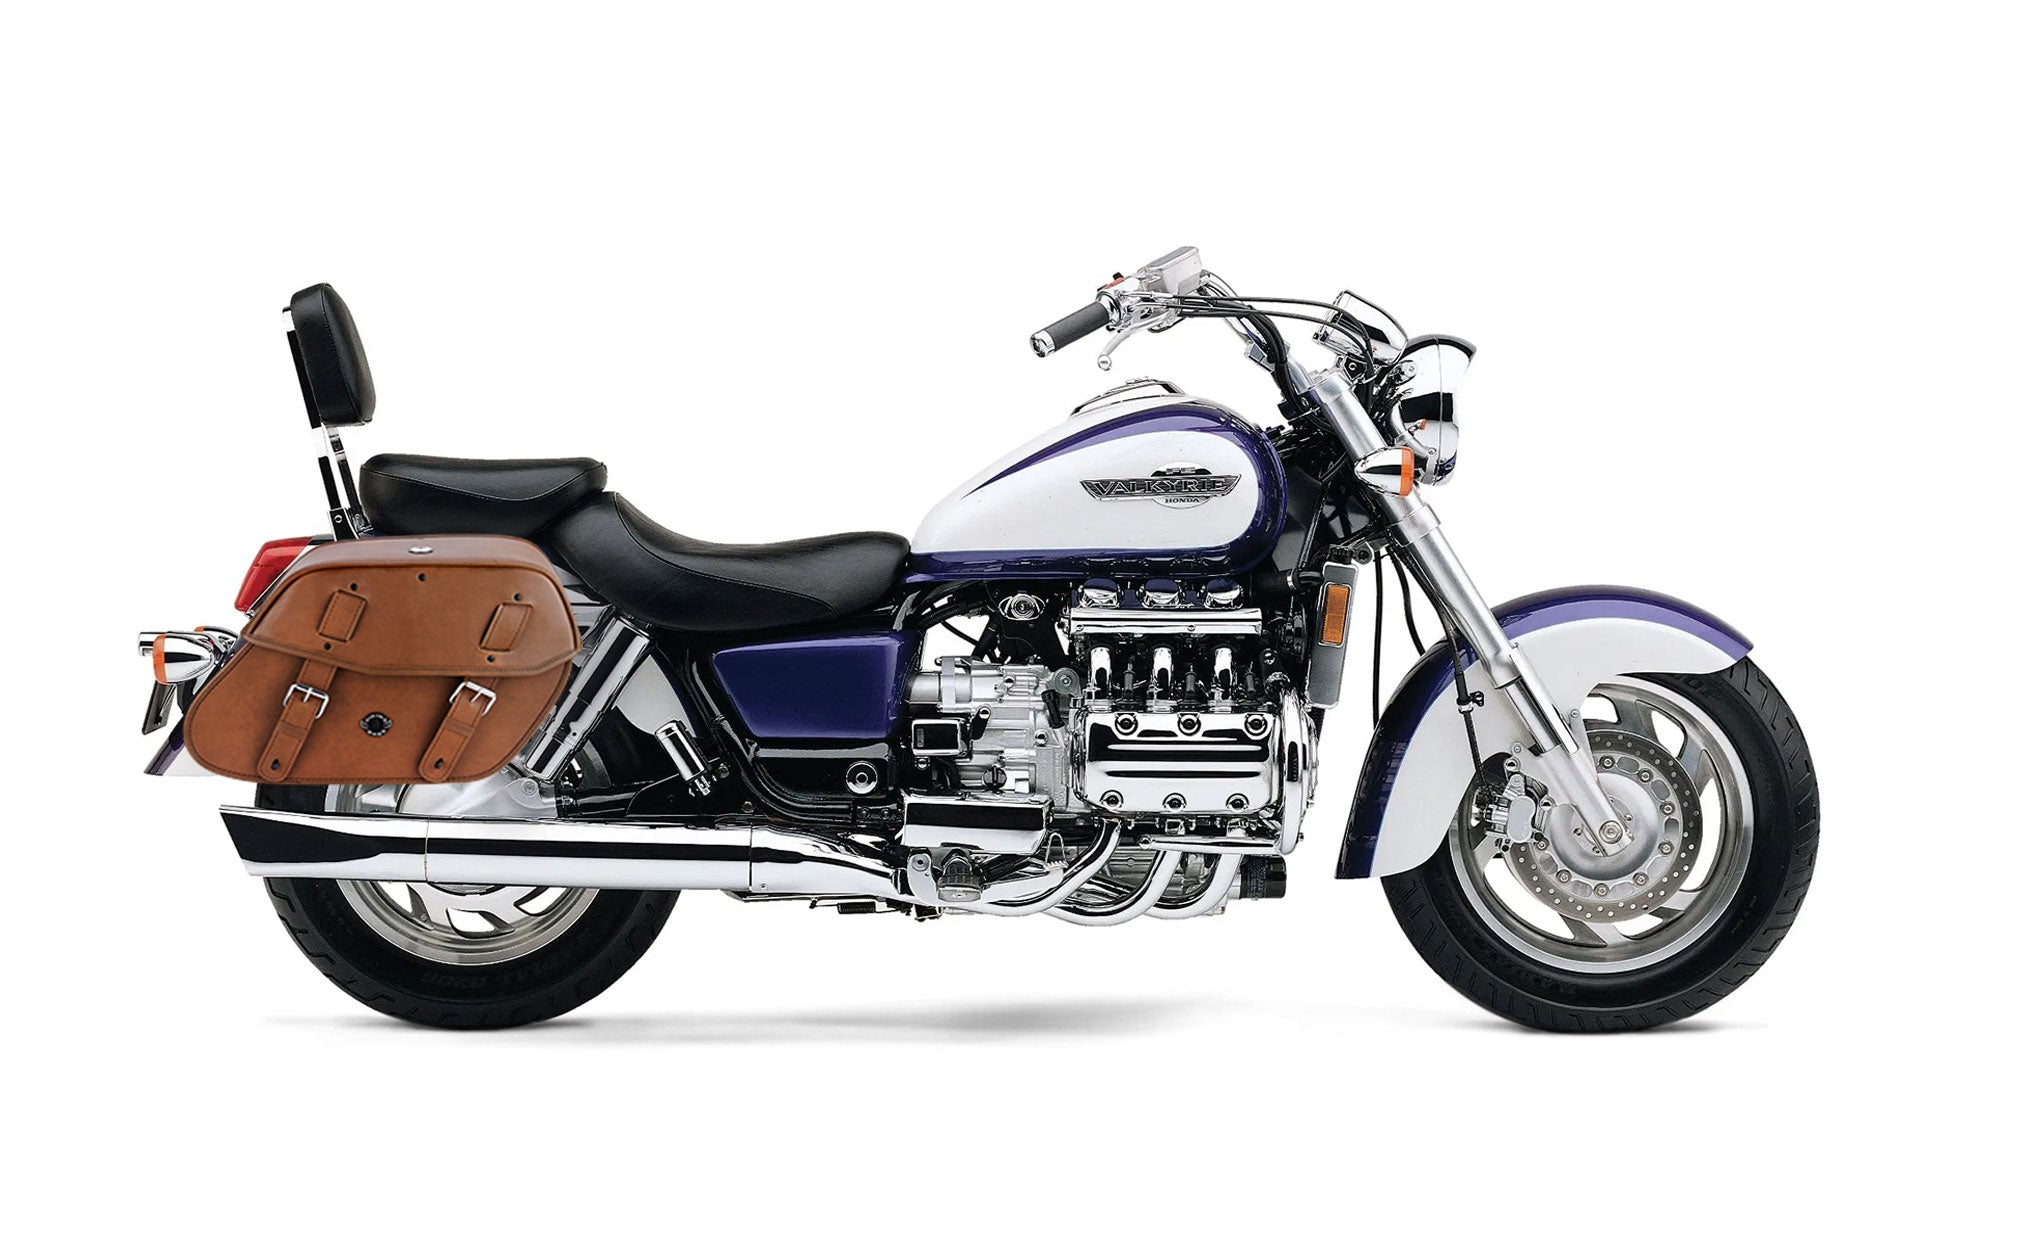 Viking Odin Brown Large Honda Valkyrie 1500 Interstate Leather Motorcycle Saddlebags on Bike Photo @expand